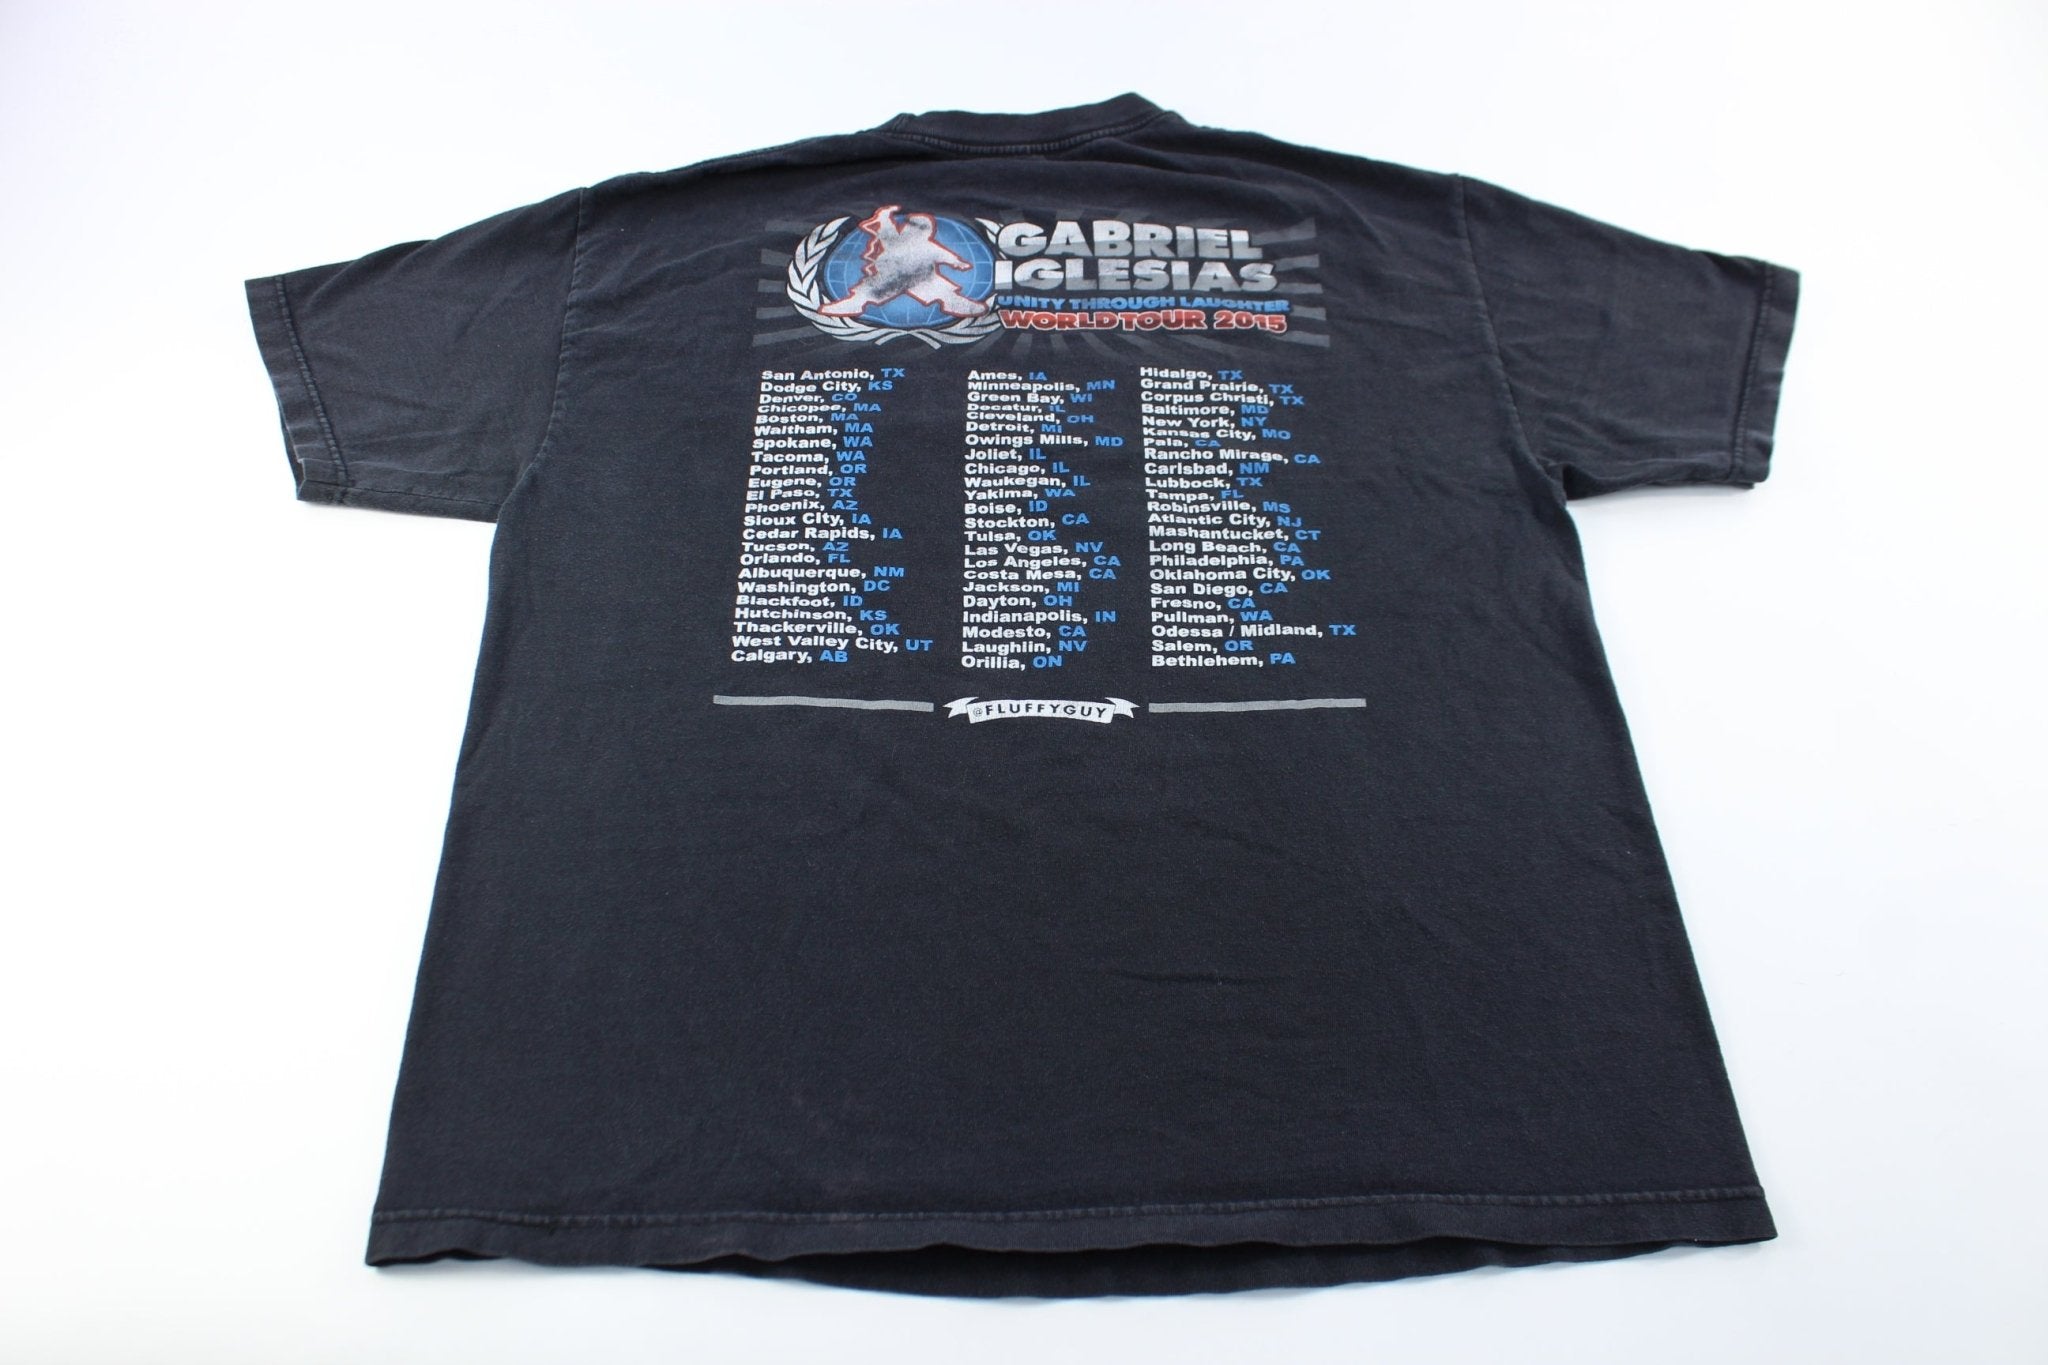 2015 Gabriel Iglesias Unity Through Laughter World Tour T-Shirt - ThriftedThreads.com